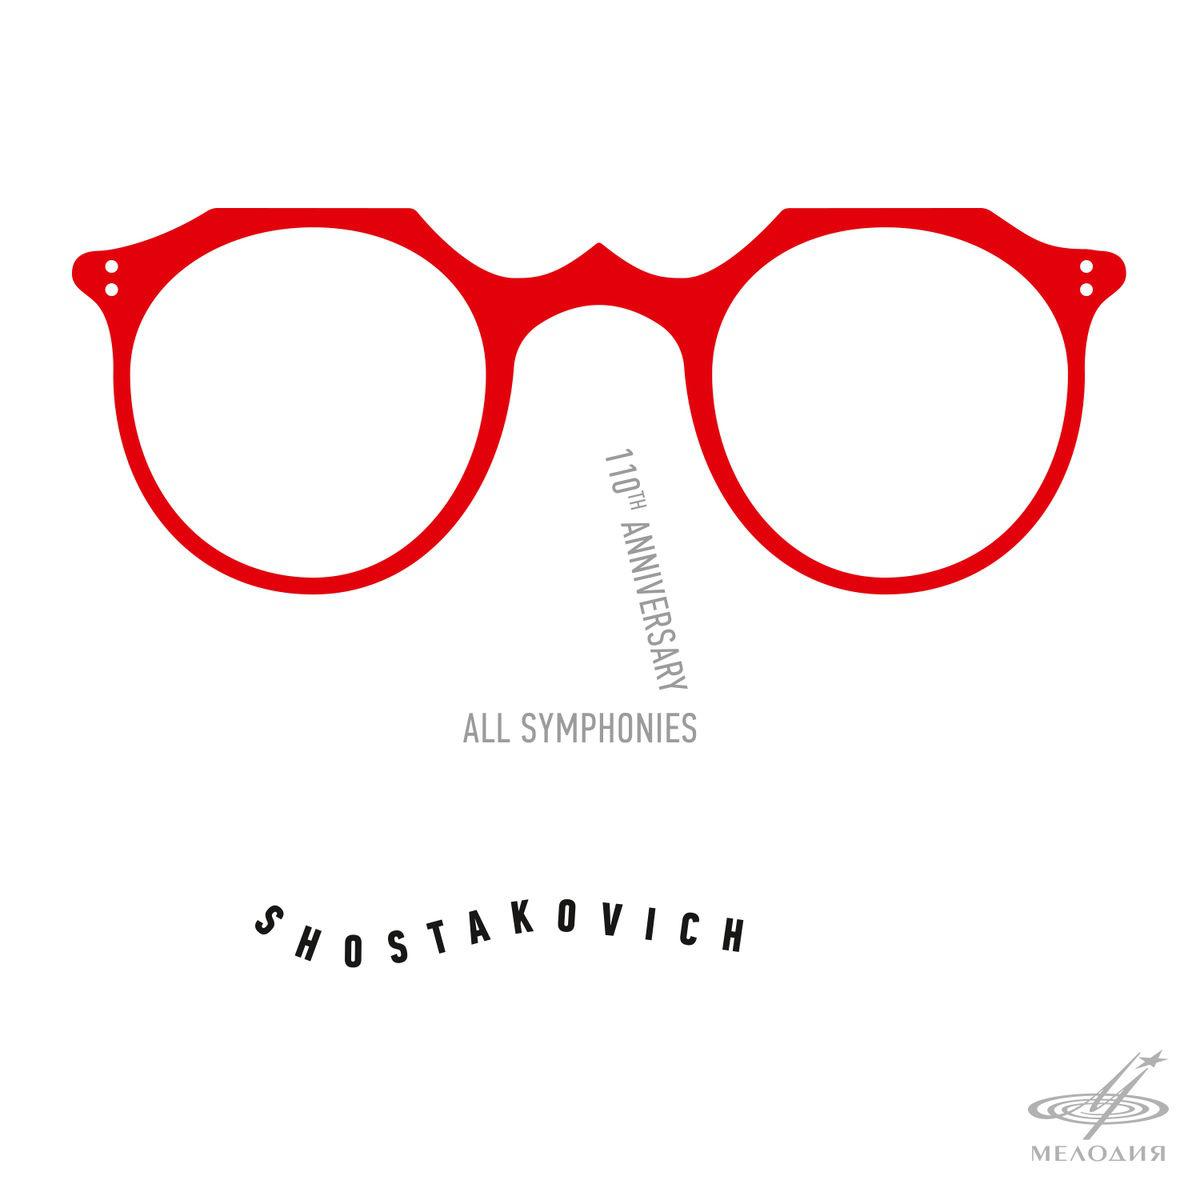 Shostakovich: All Symphonies